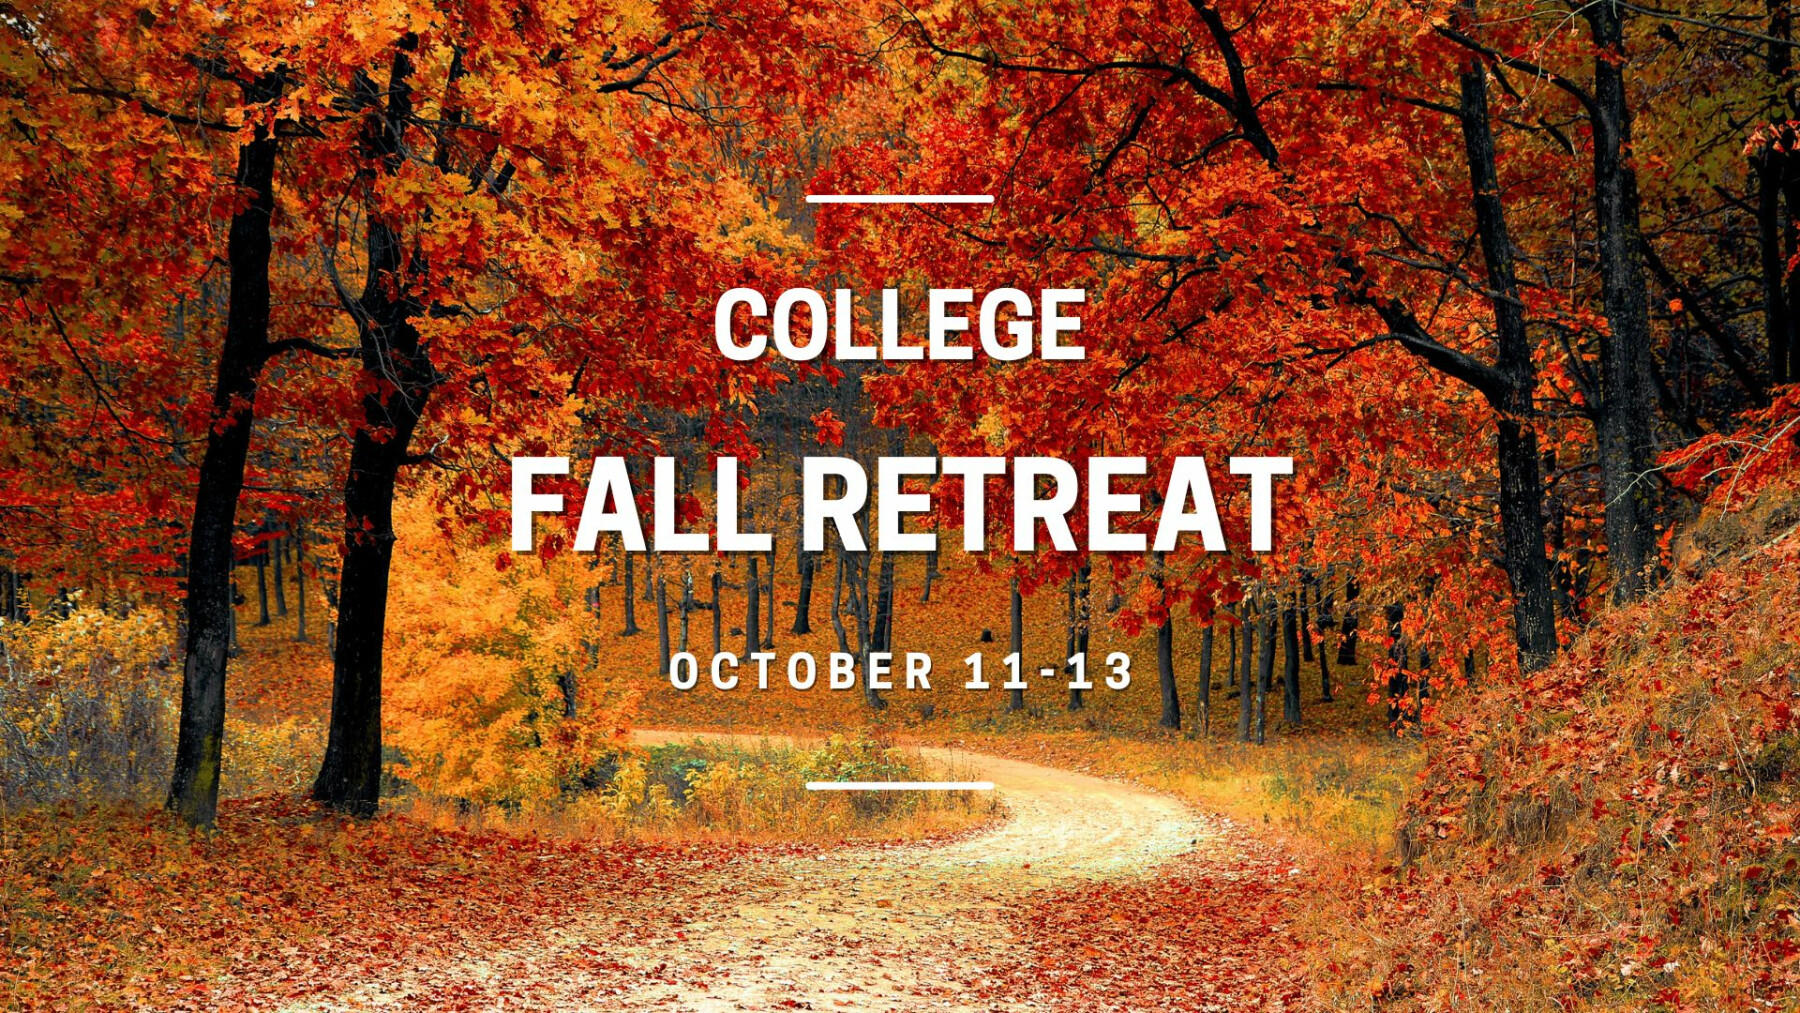 College Fall Retreat